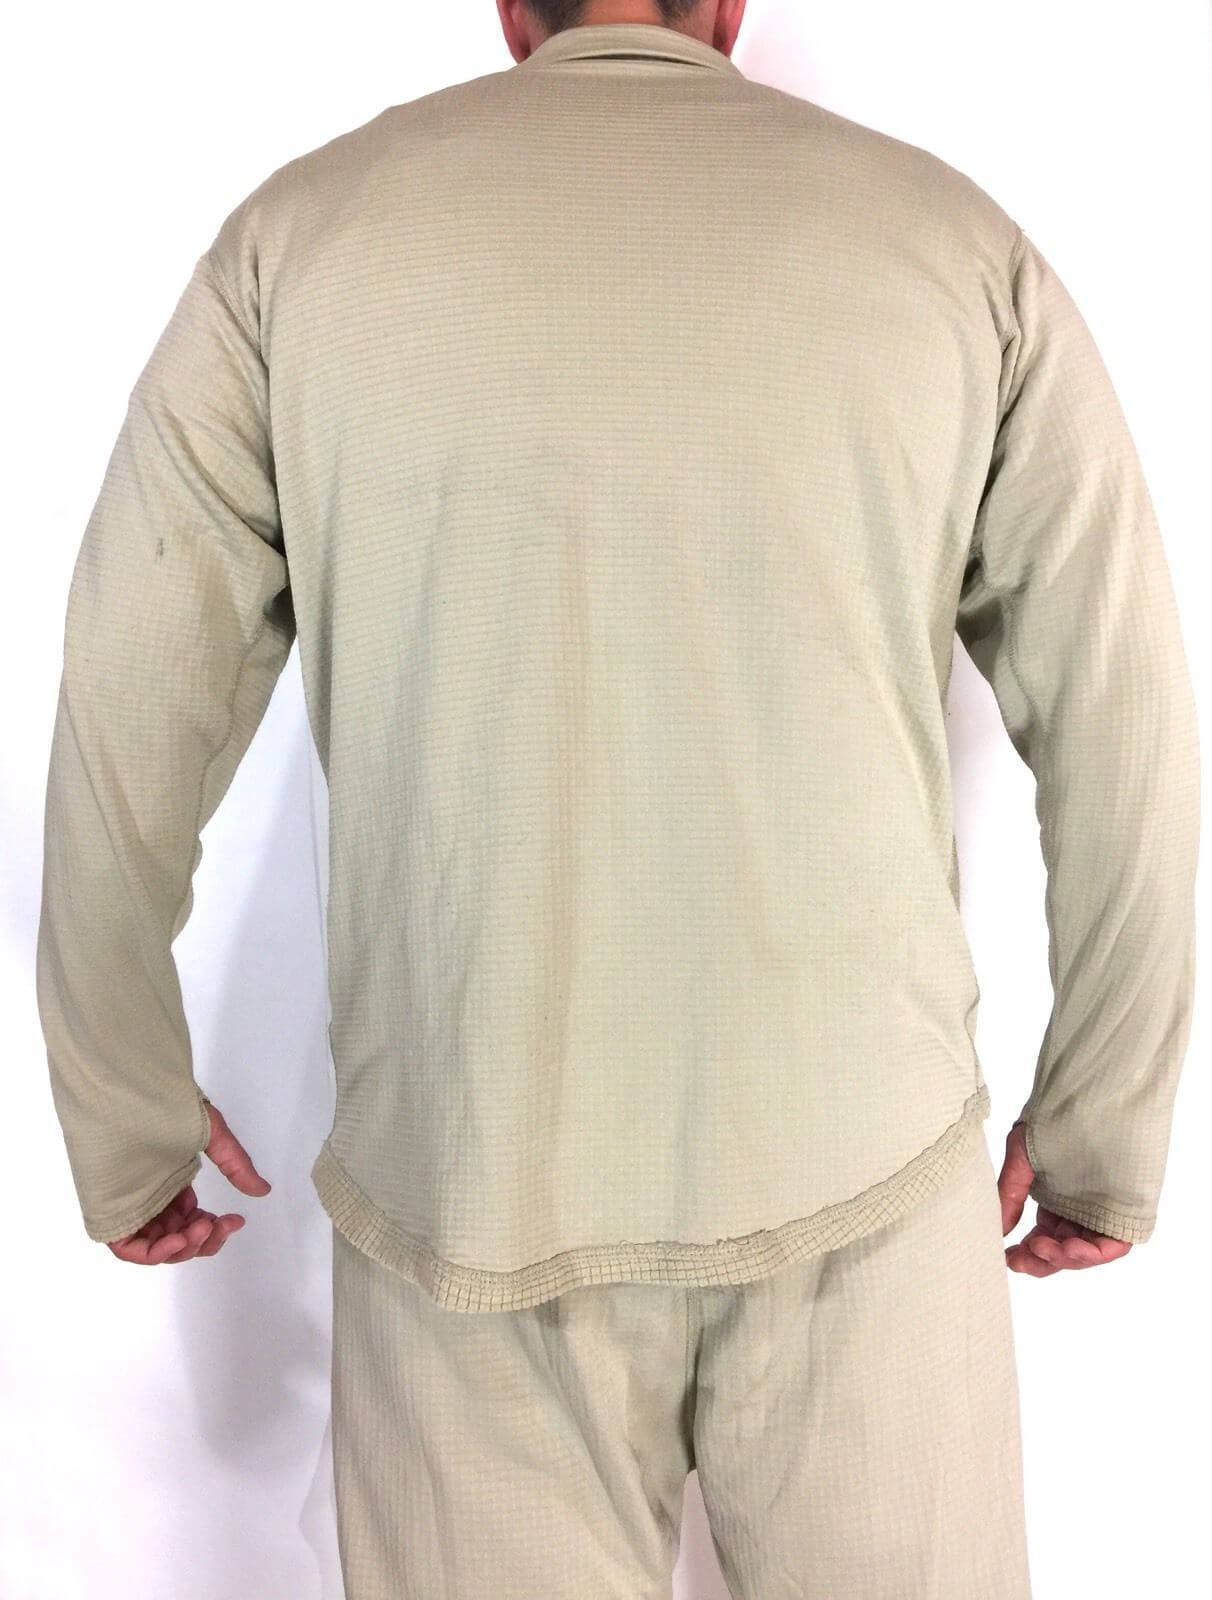 New Other Undershirt polypro brown 1/4 zip shirt USGI cold weather ECW 